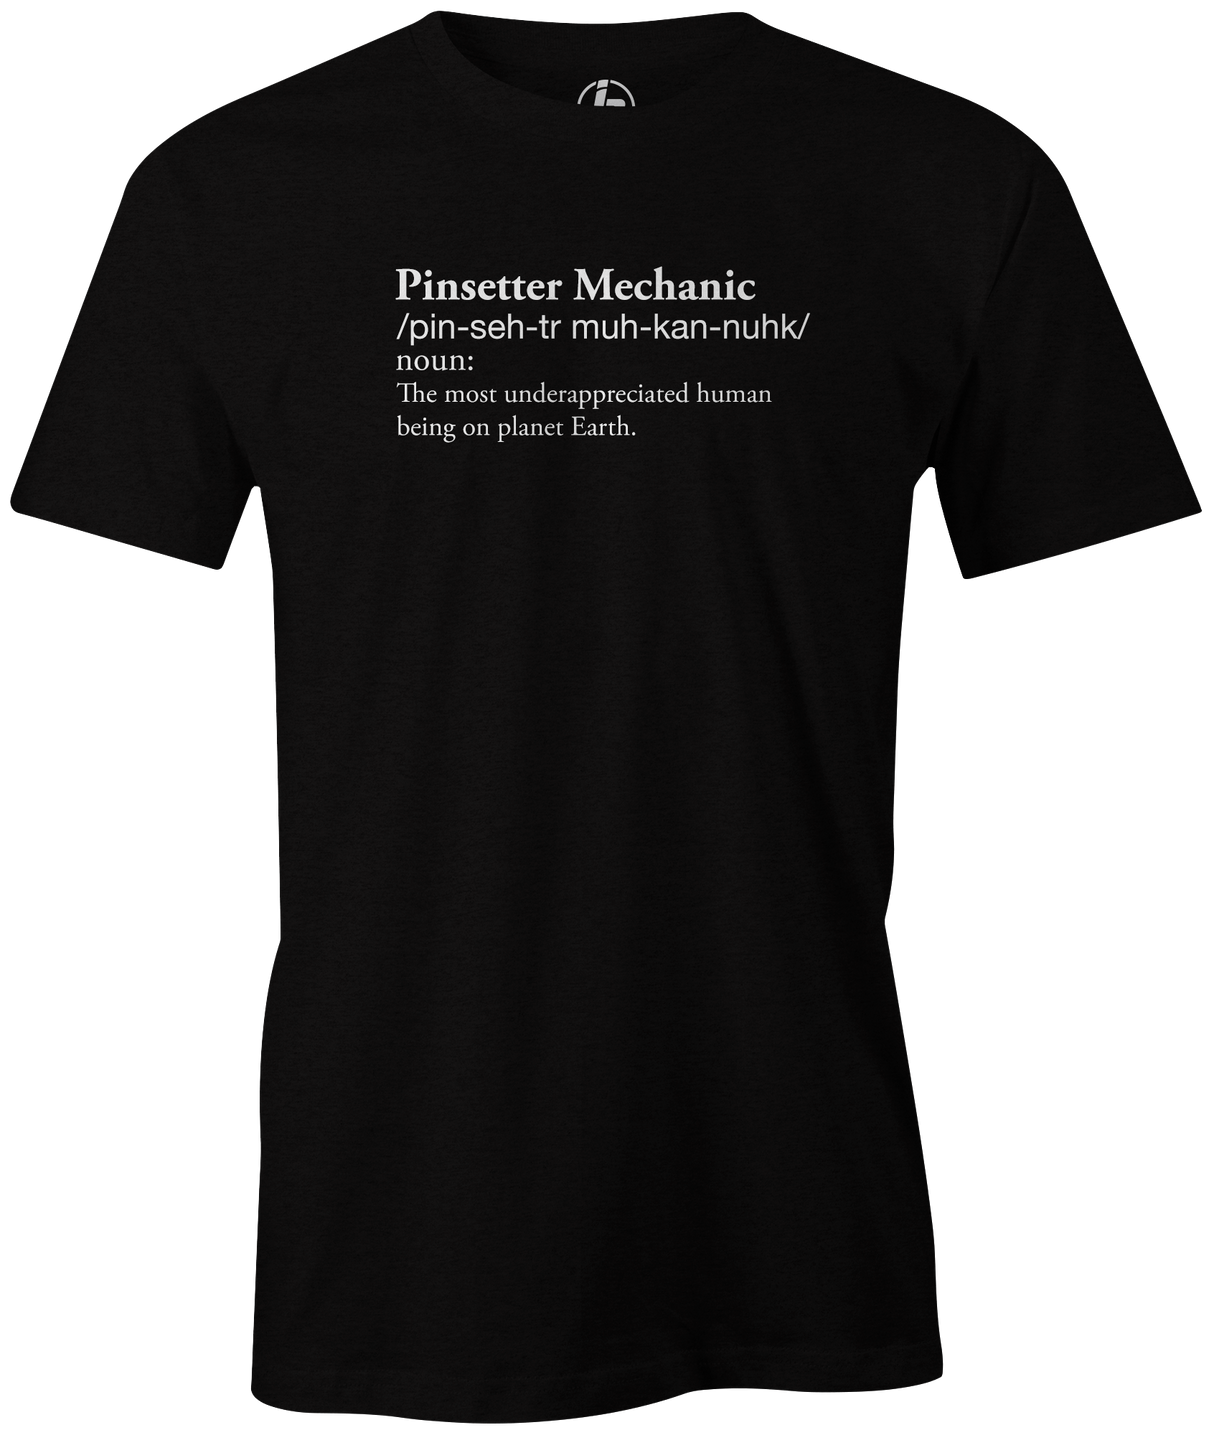 pinsetter-mechanic-bowl-shirt-bowling-tee-tshirt